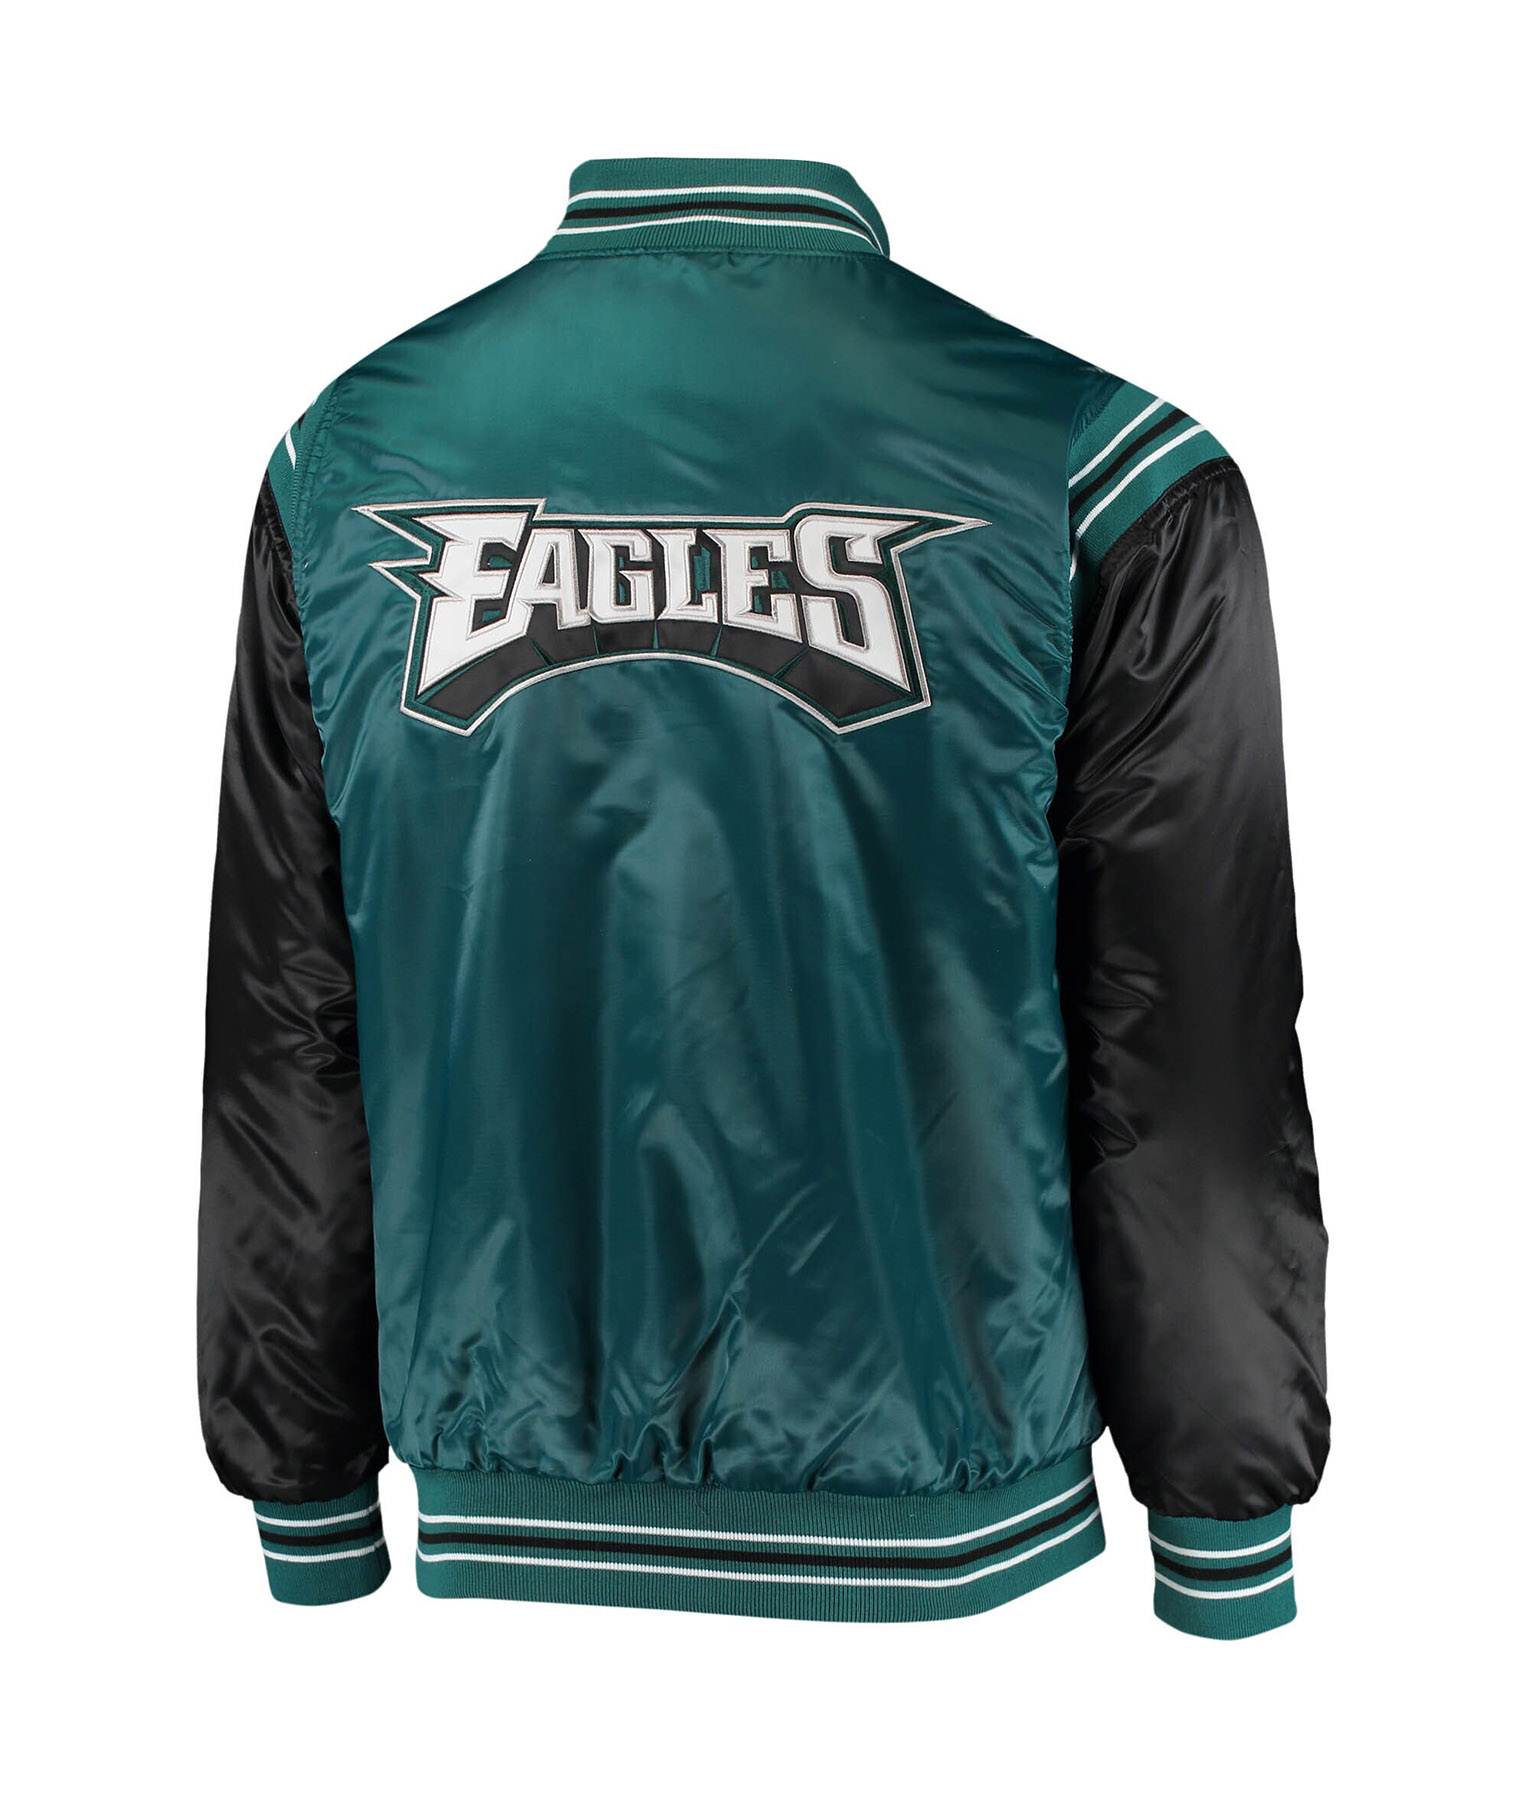 P Eagles Green Varsity Jacket (1)